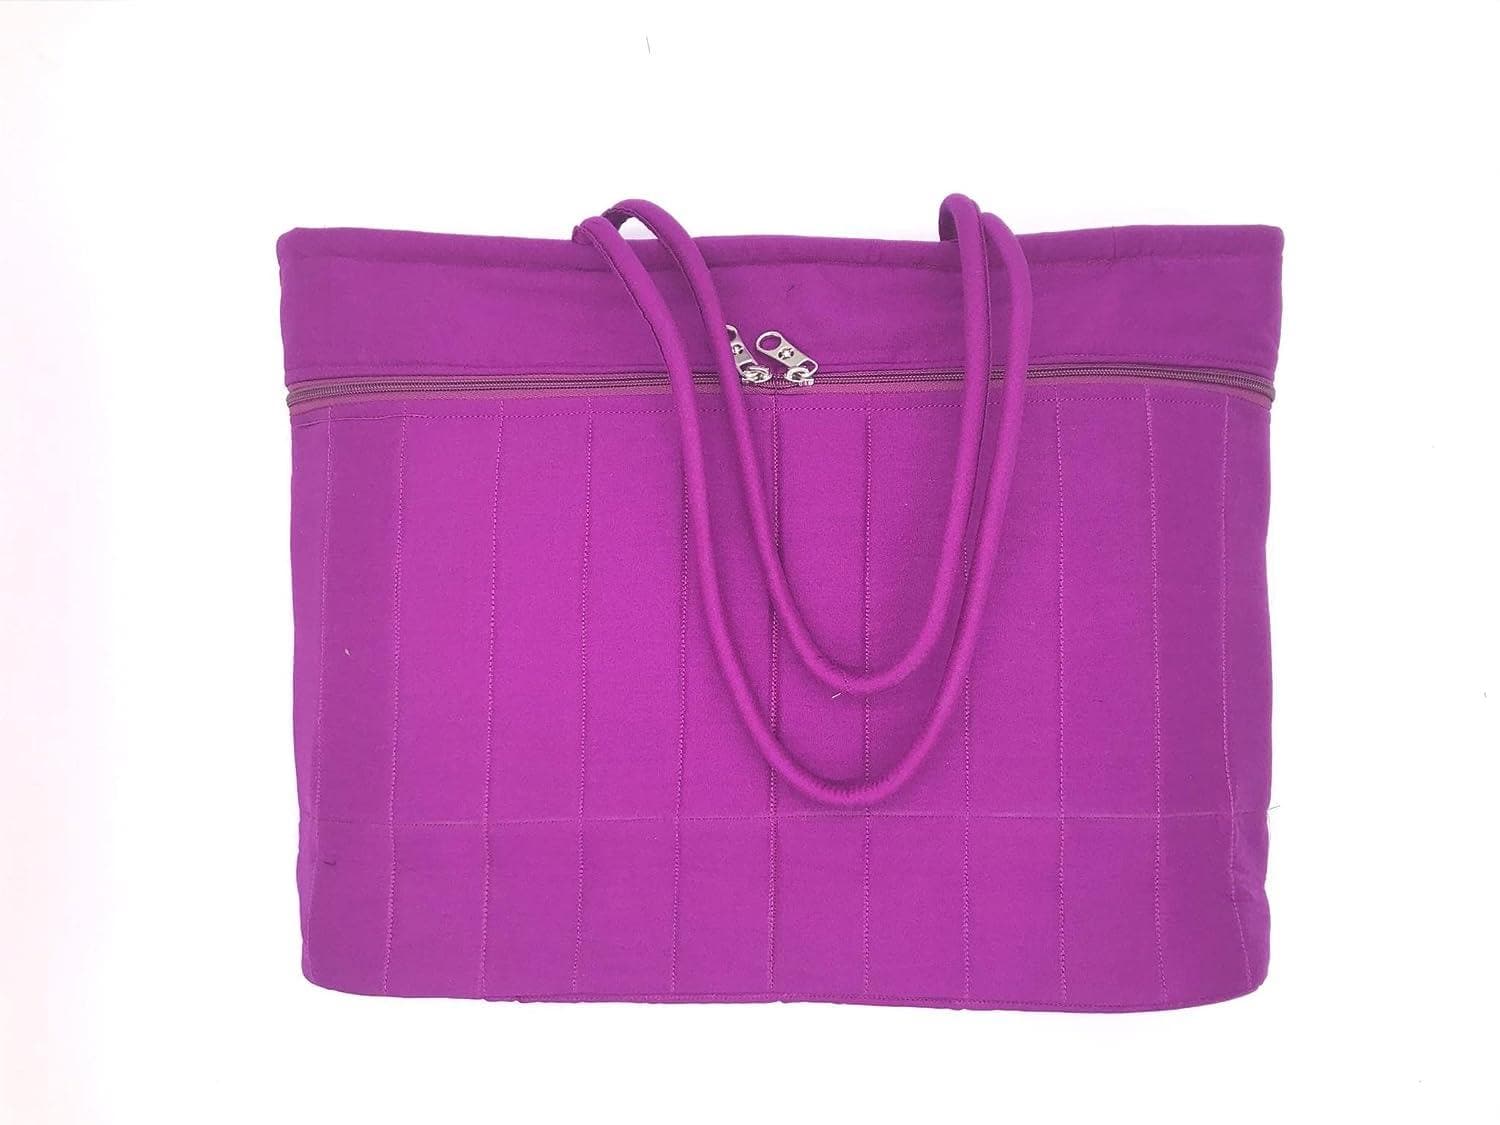 Embroidery banjara design tote handbag (purple) - halfpeapp